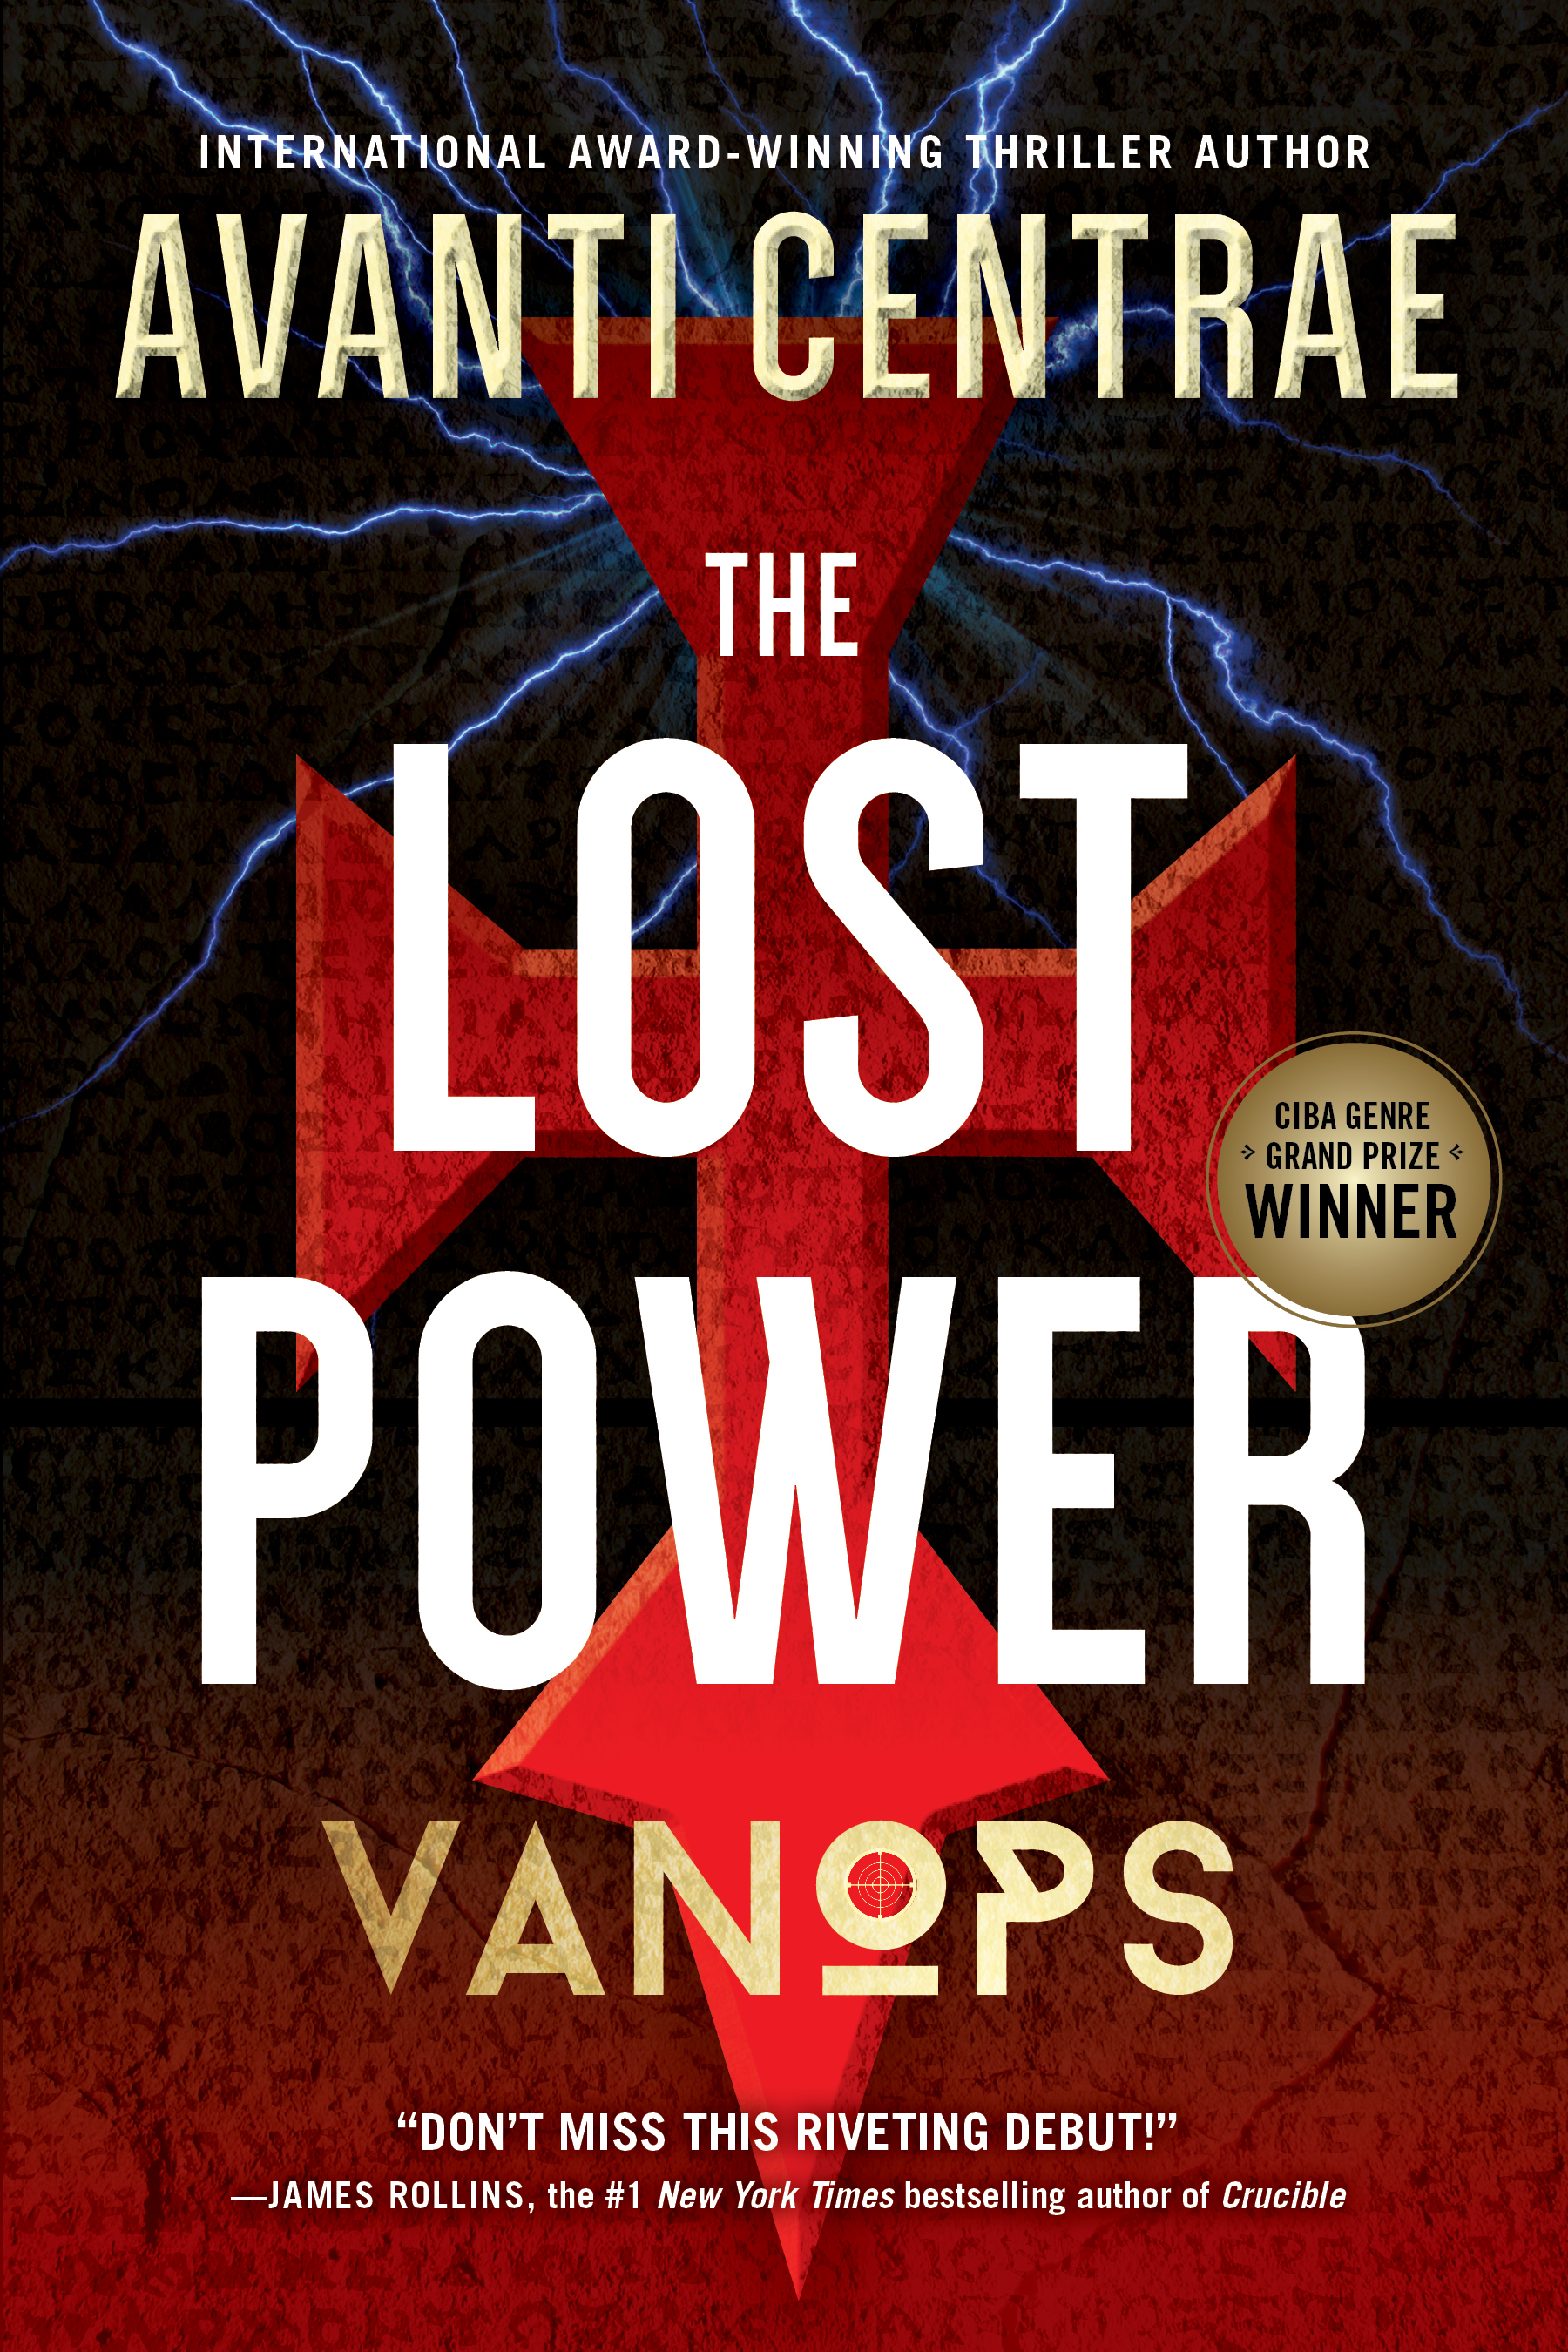 VanOps: The Lost Power by Avanti Centrae